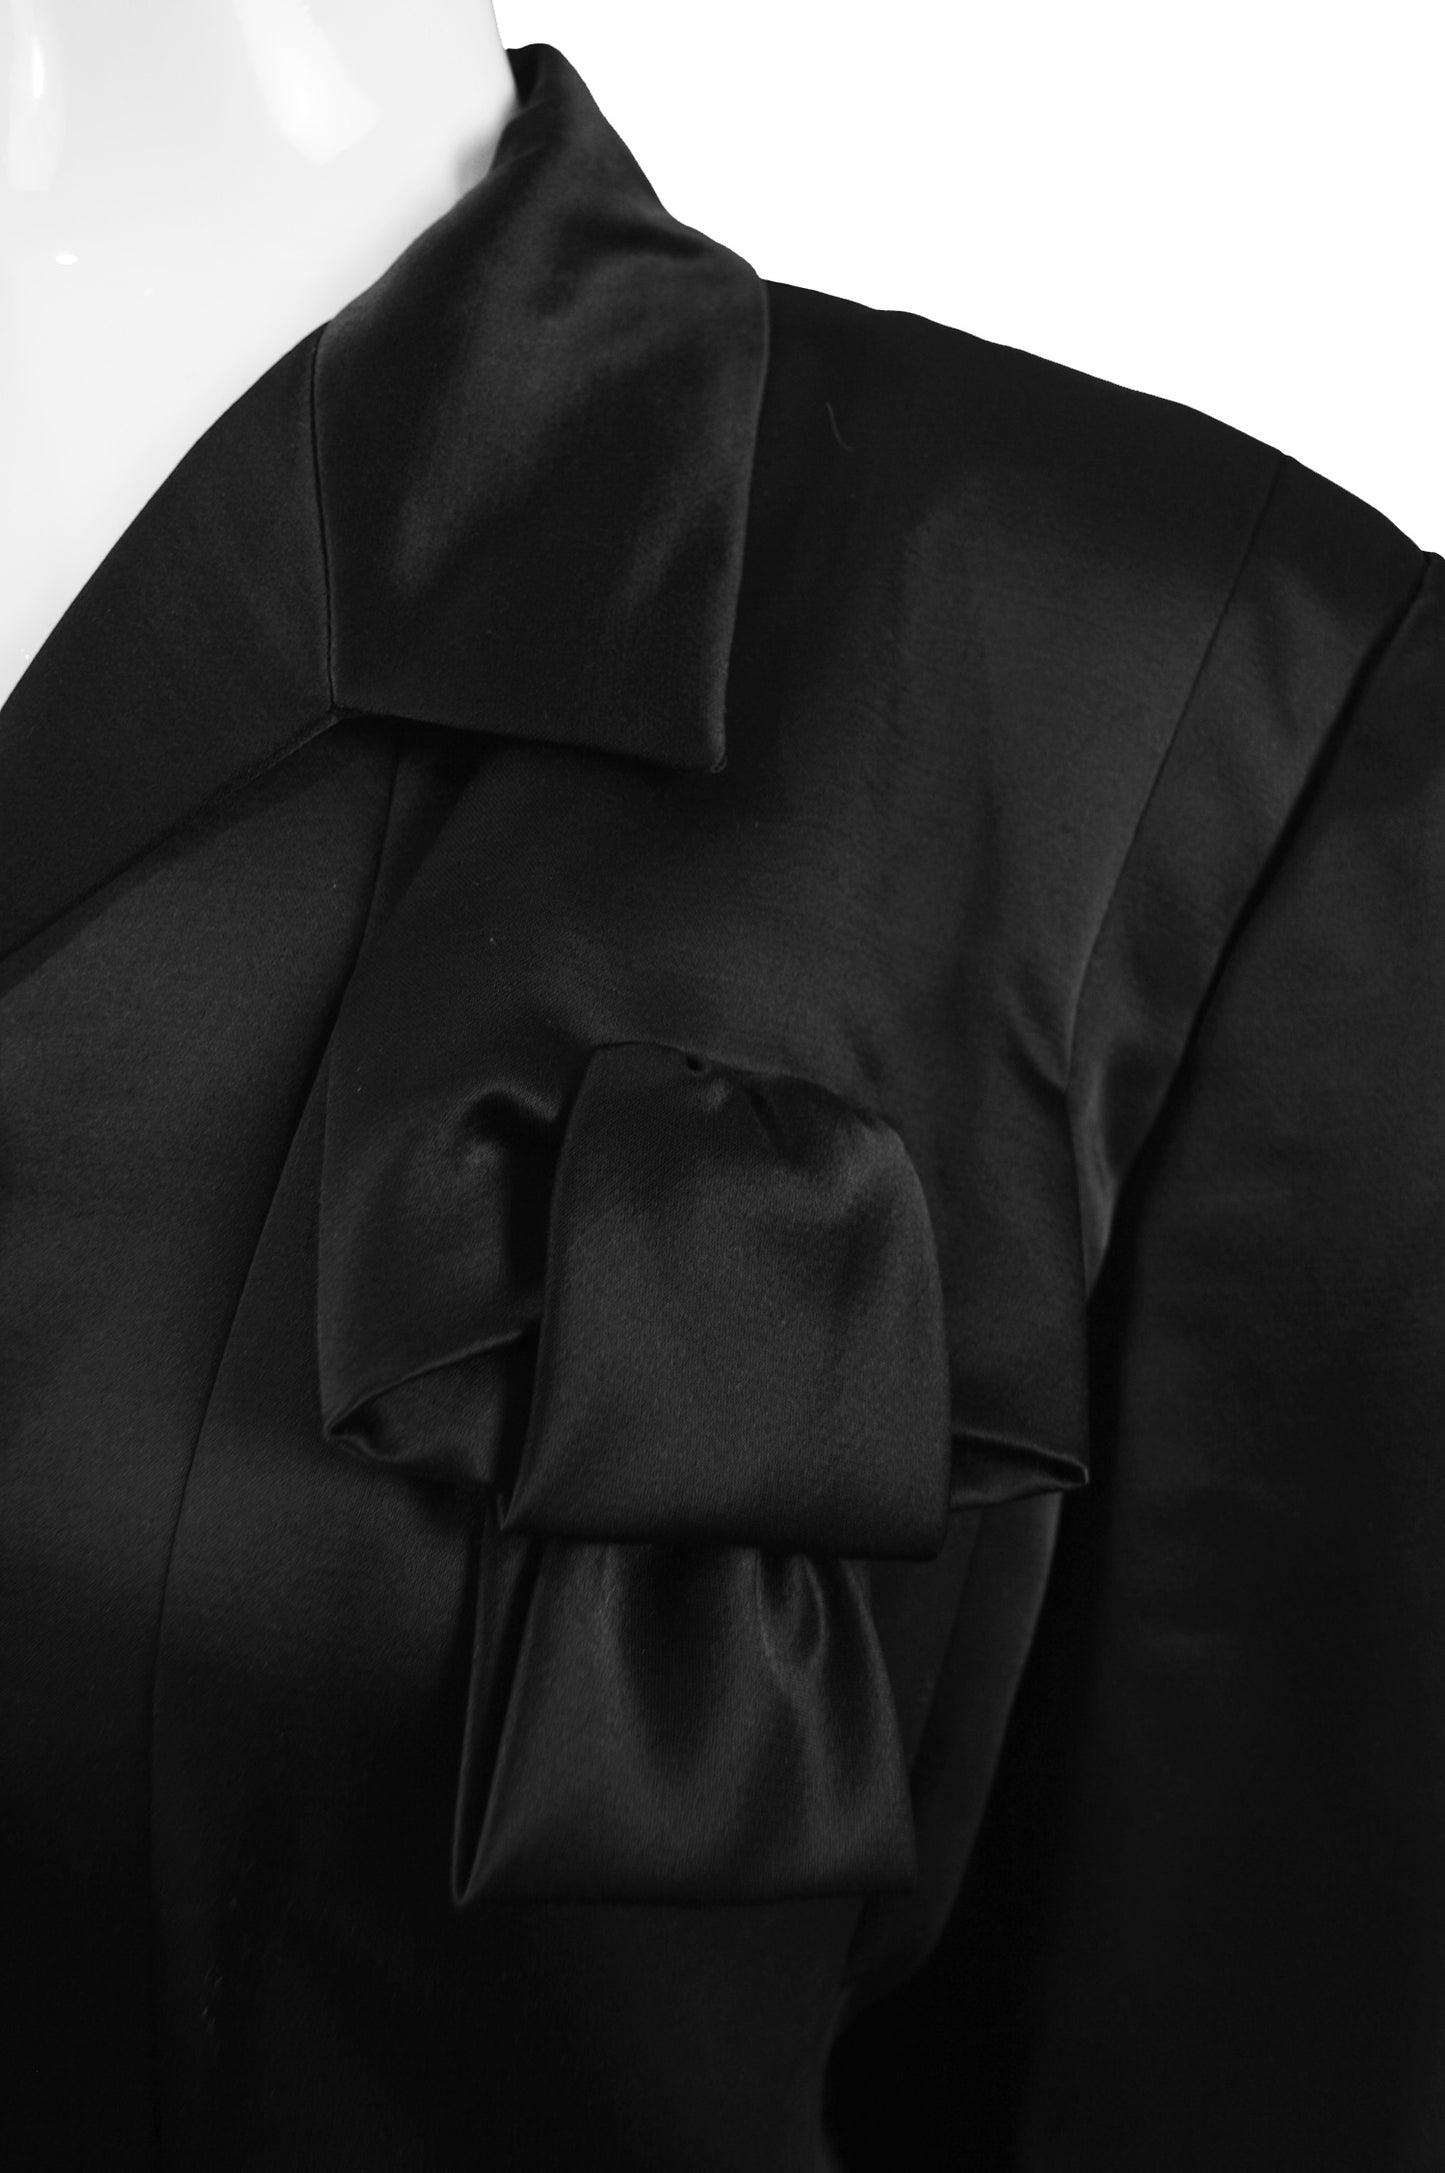 Preowned Black Satin Evening Jacket, 1996